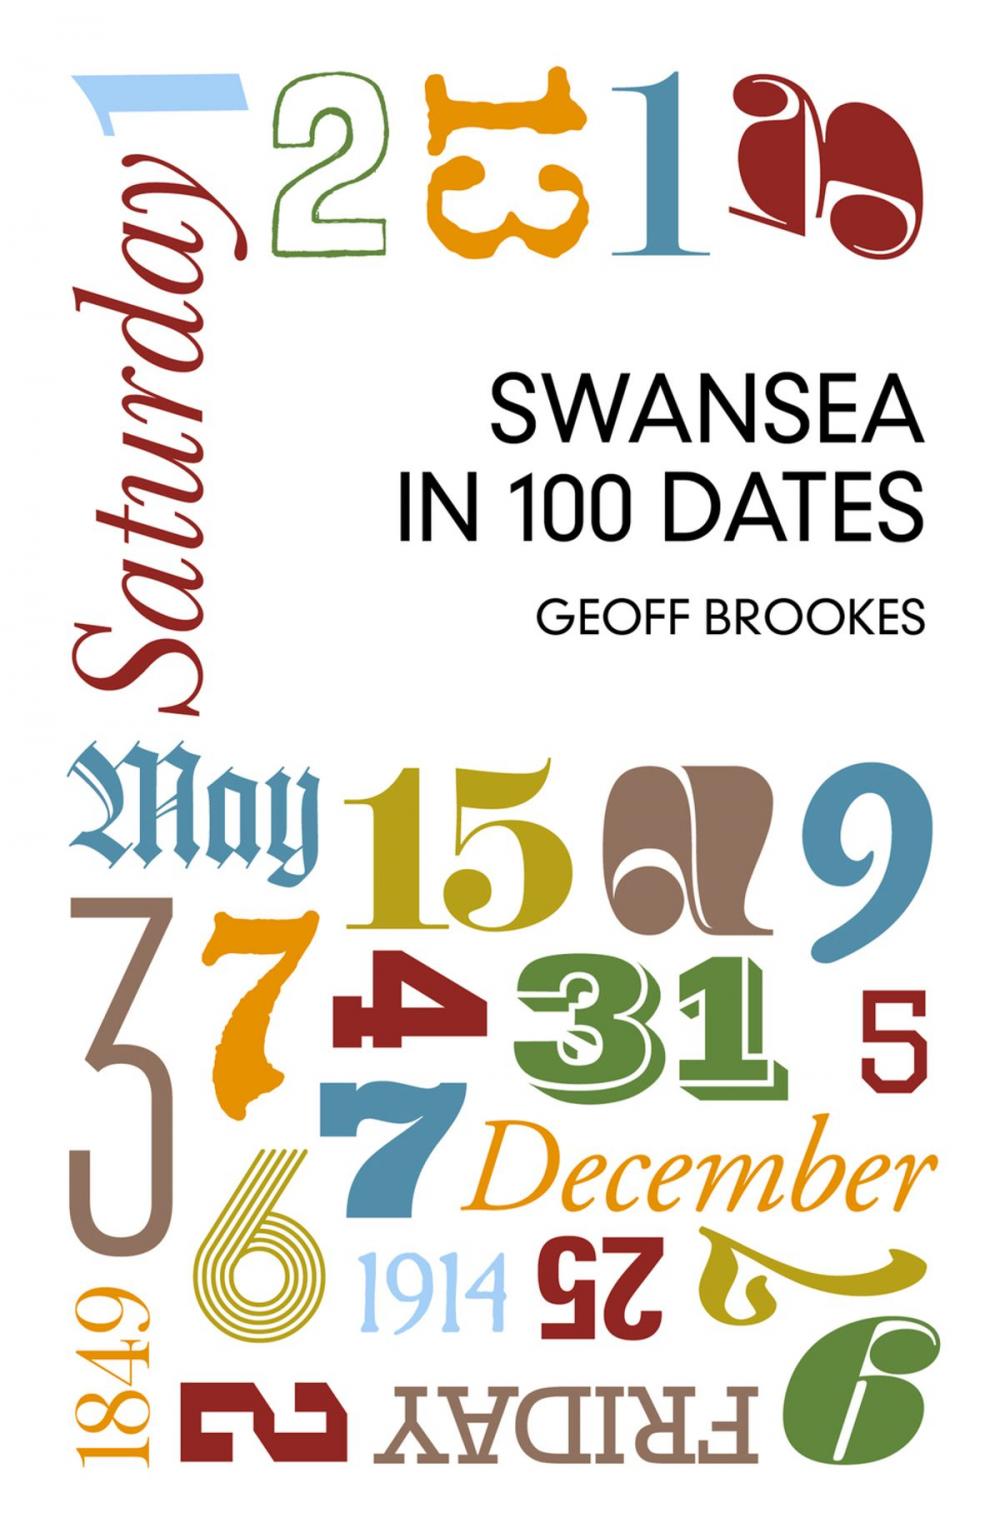 Big bigCover of Swansea in 100 Dates